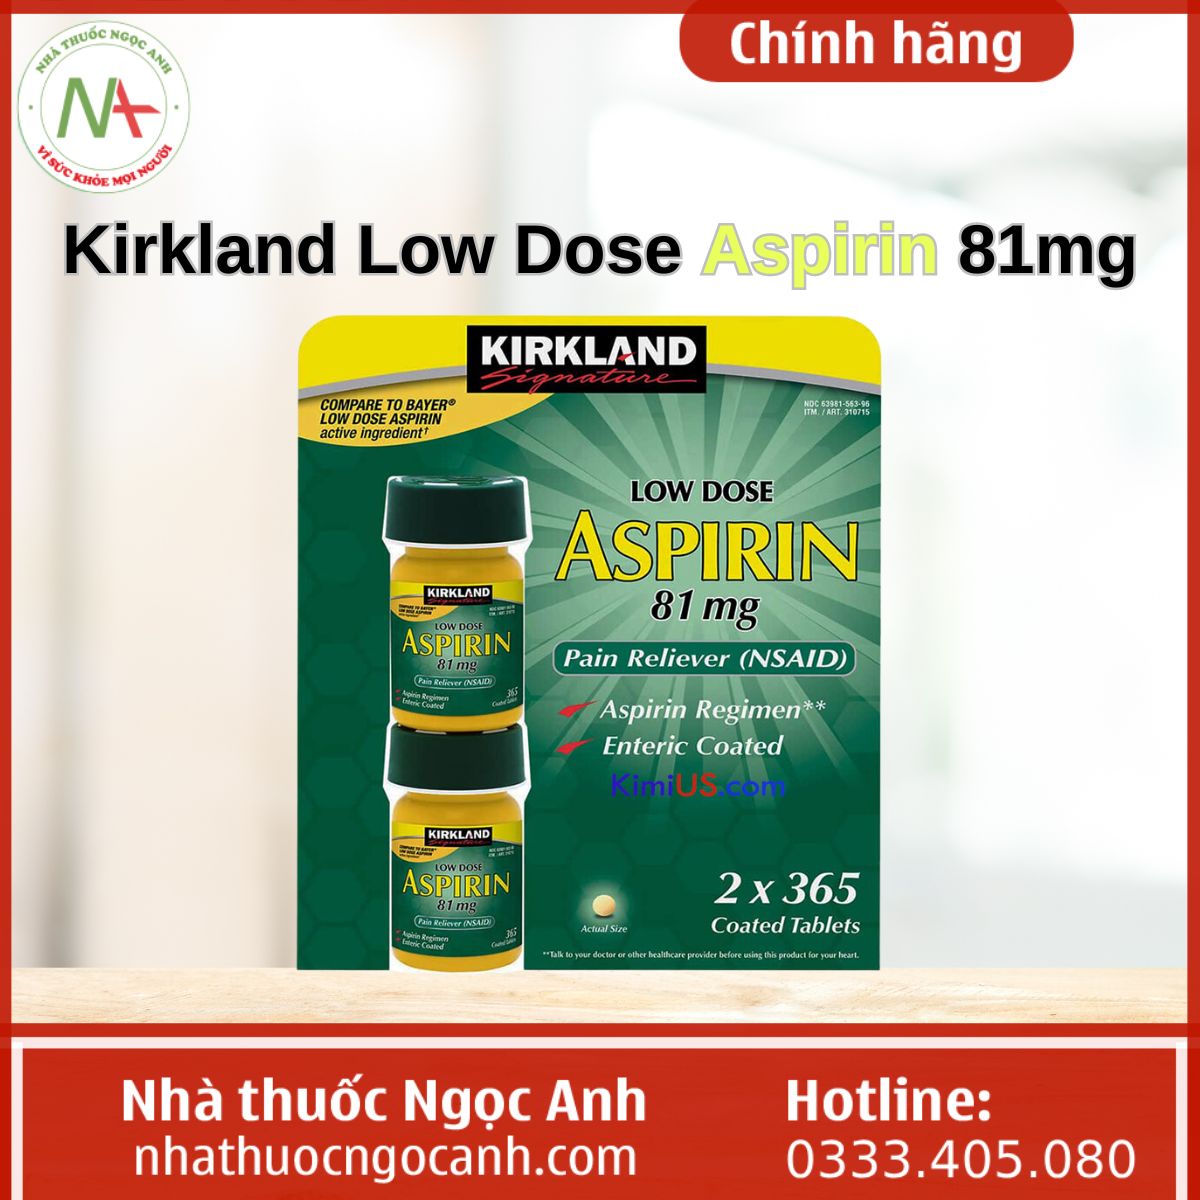 Kirkland Low Dose Aspirin 81mg giảm đau hiệu quả